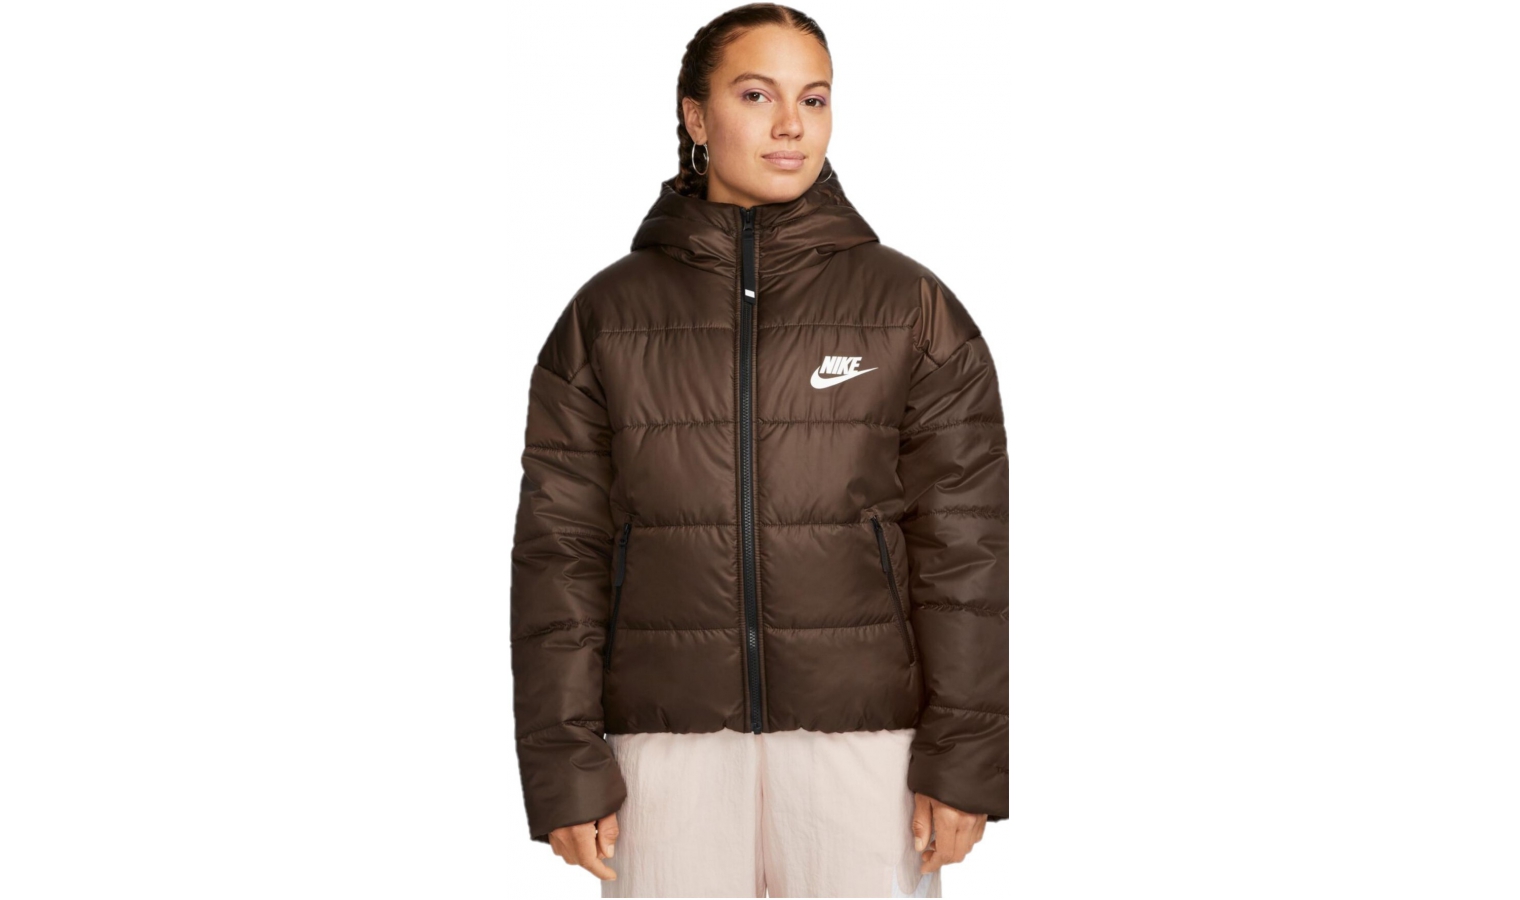 Womens winter jacket Nike AD RPL JKT brown HD SYN TF NSW W W 